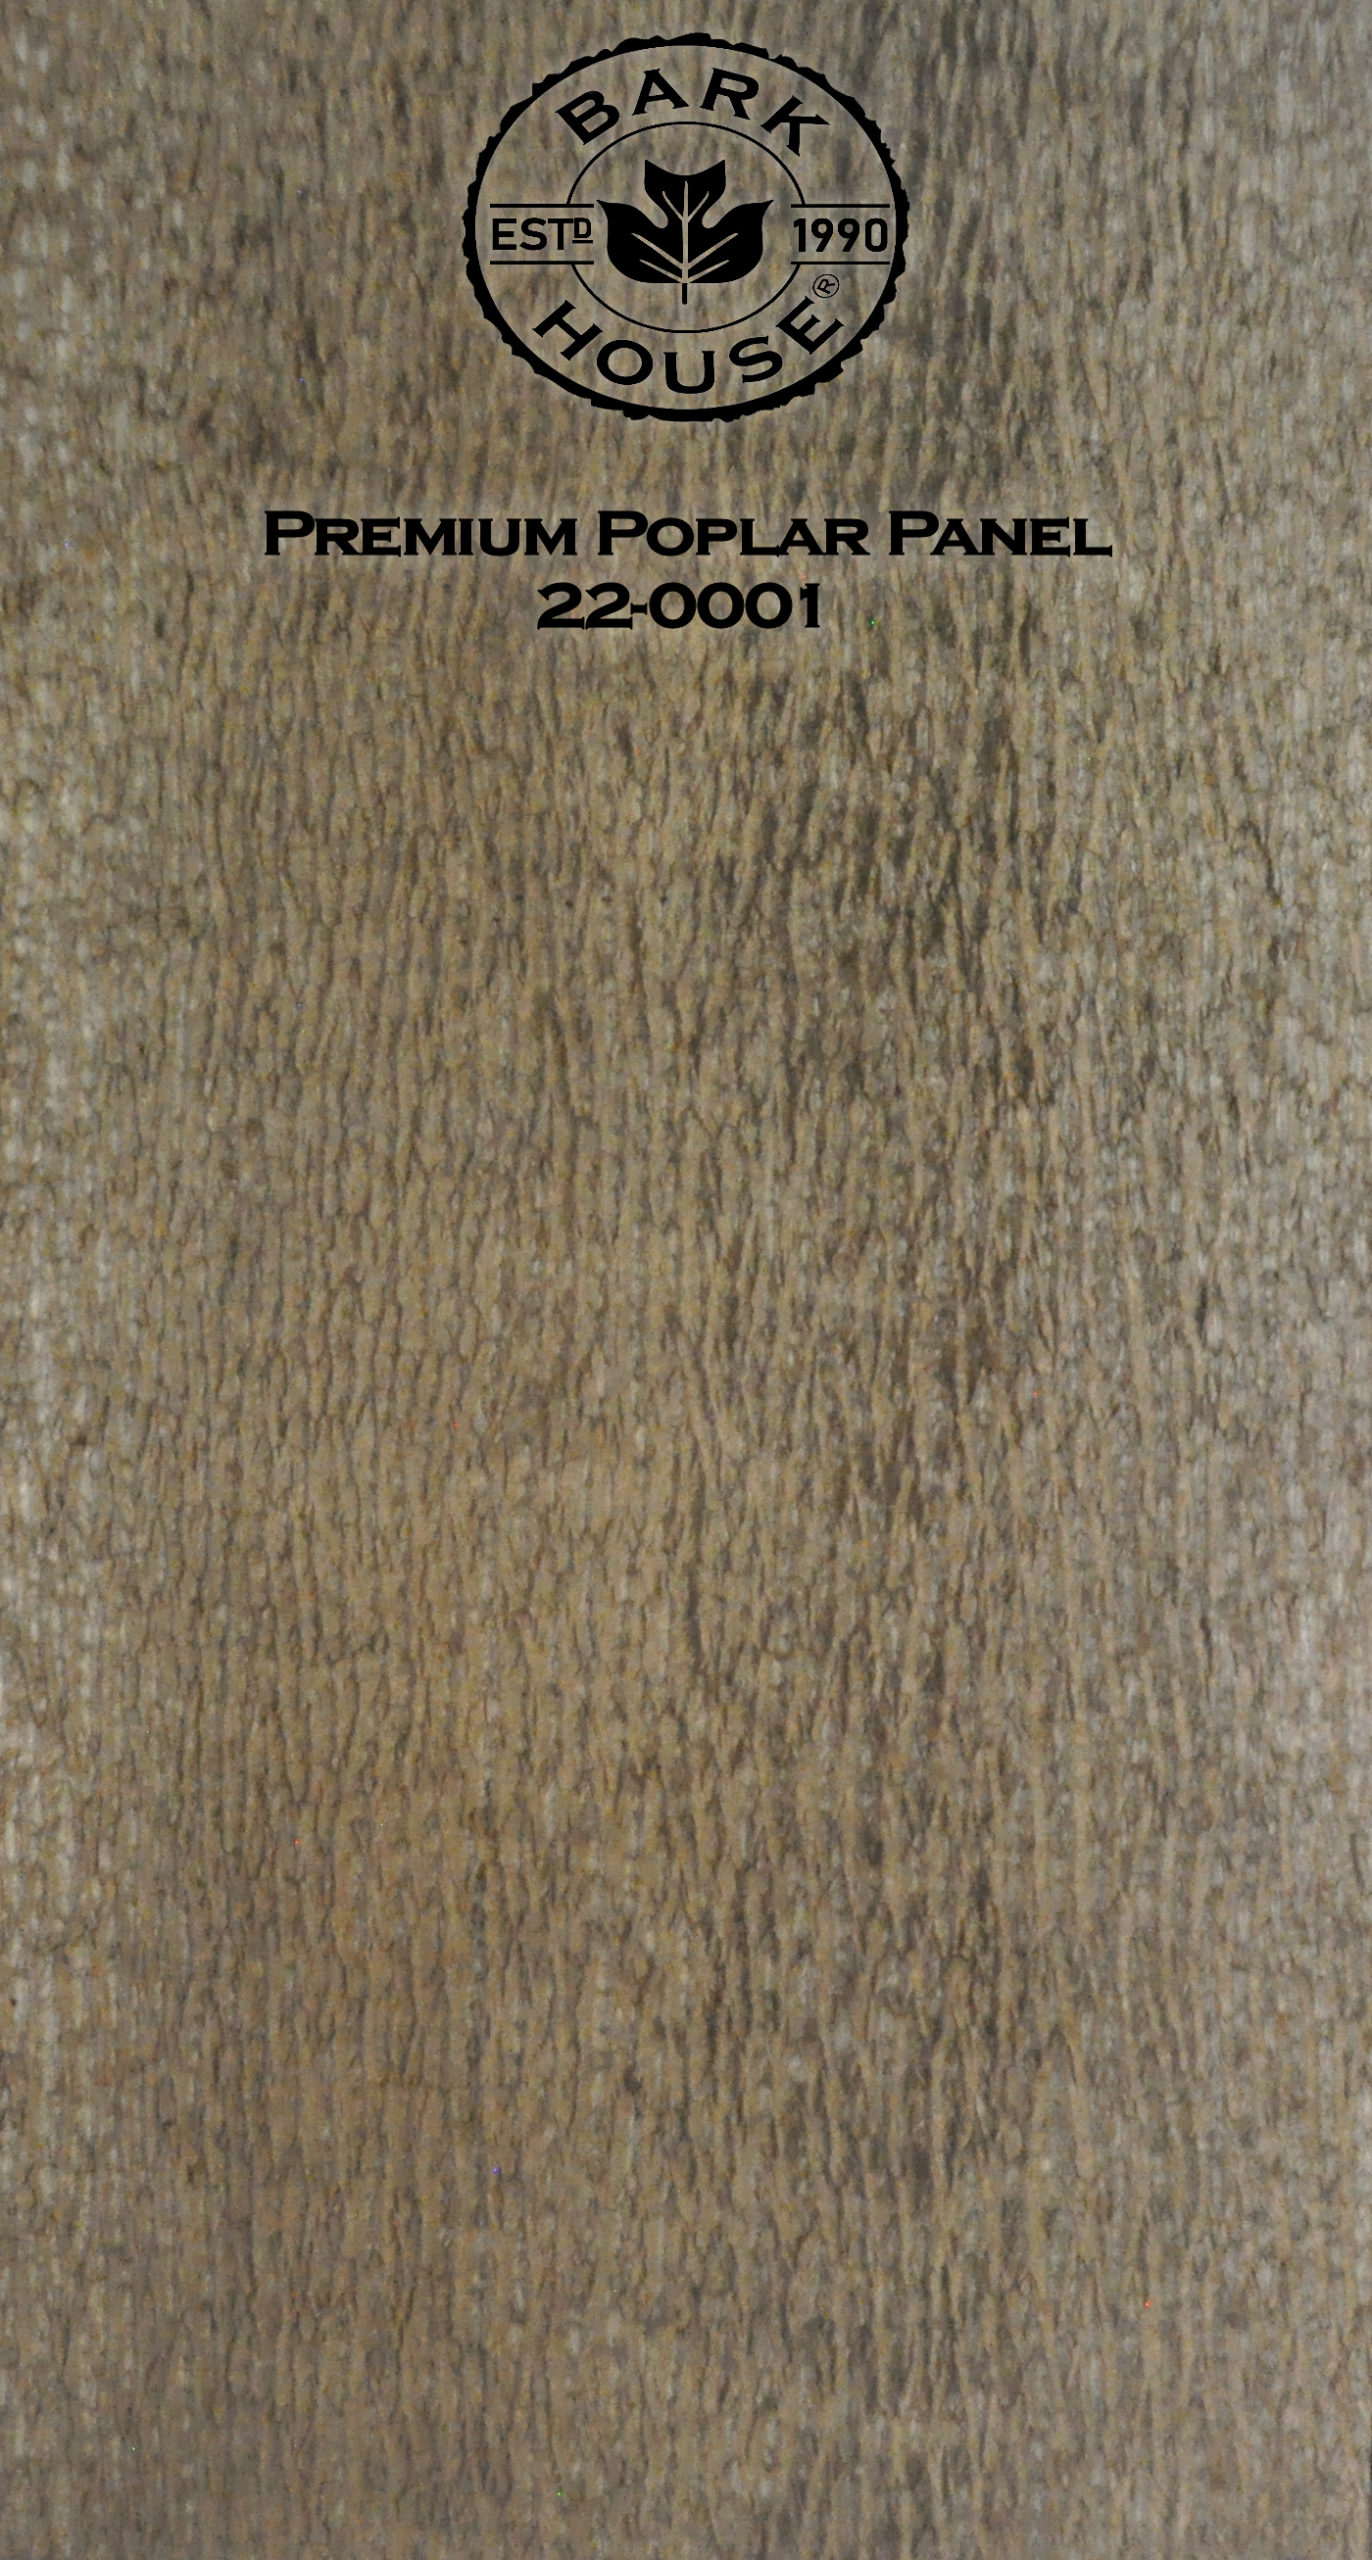 Bark House poplar bark panel SKU POPP-PRE-22-0001